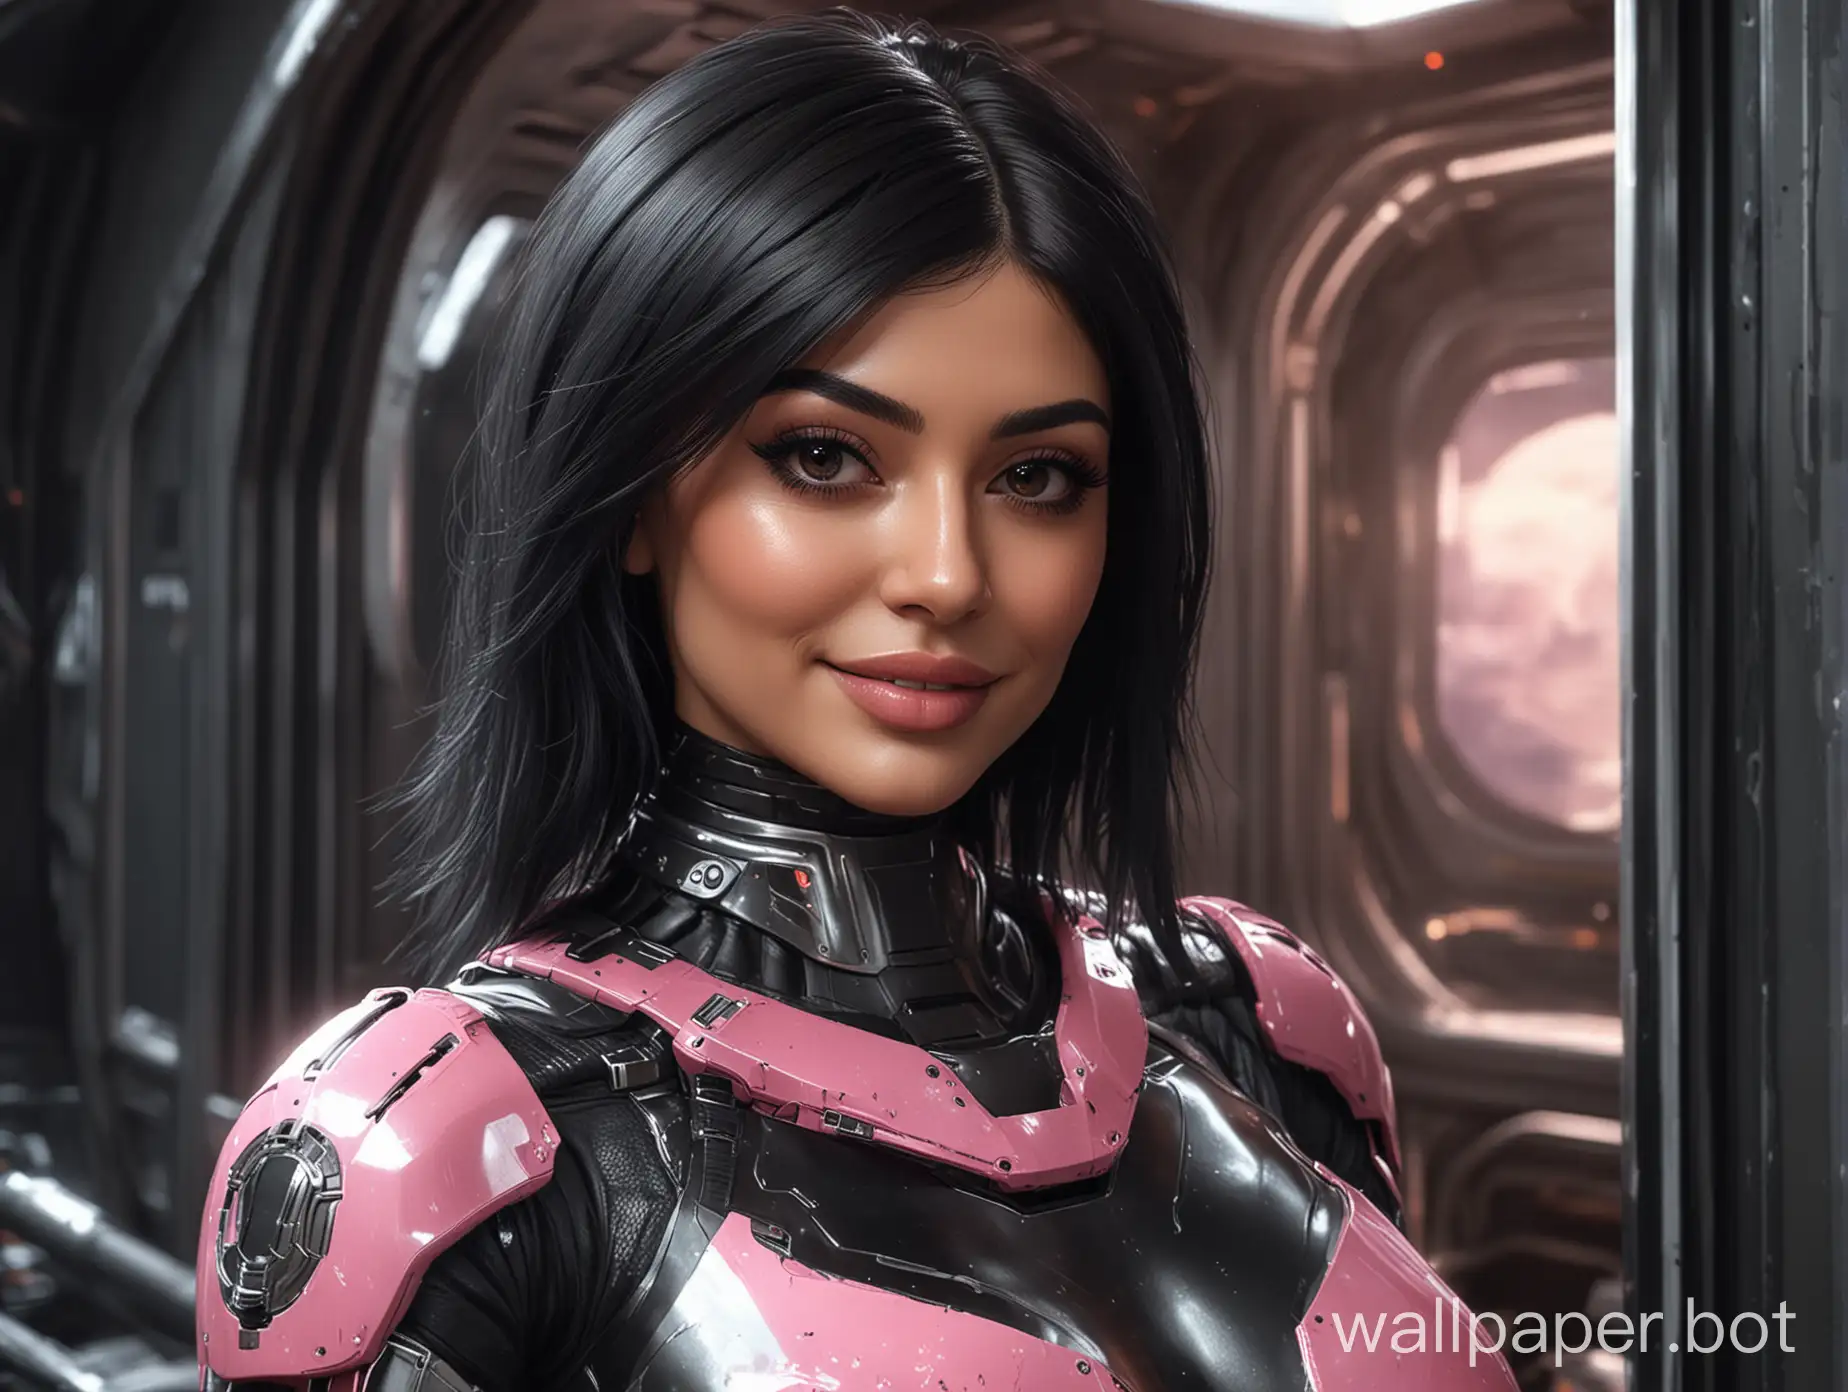 Futuristic-Selfie-Cyber-Armored-Kylie-Jenner-Lookalike-in-Space